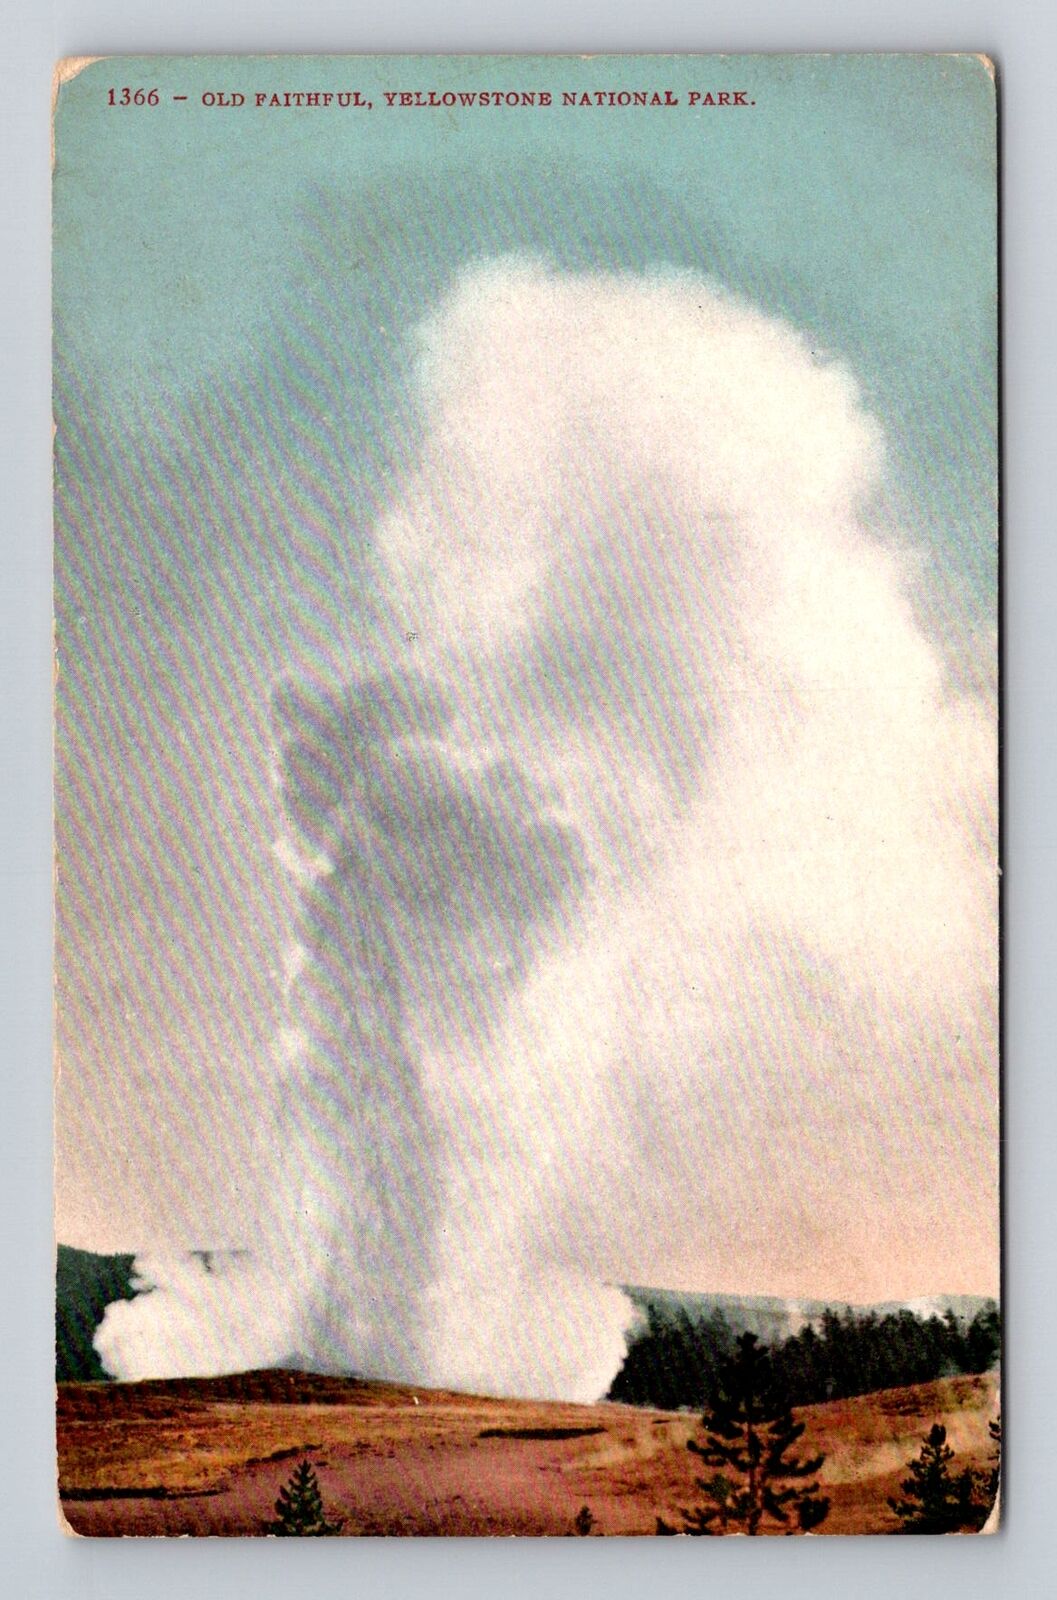 Yellowstone National Park, Old Faithful, Series #1366 Vintage Souvenir Postcard